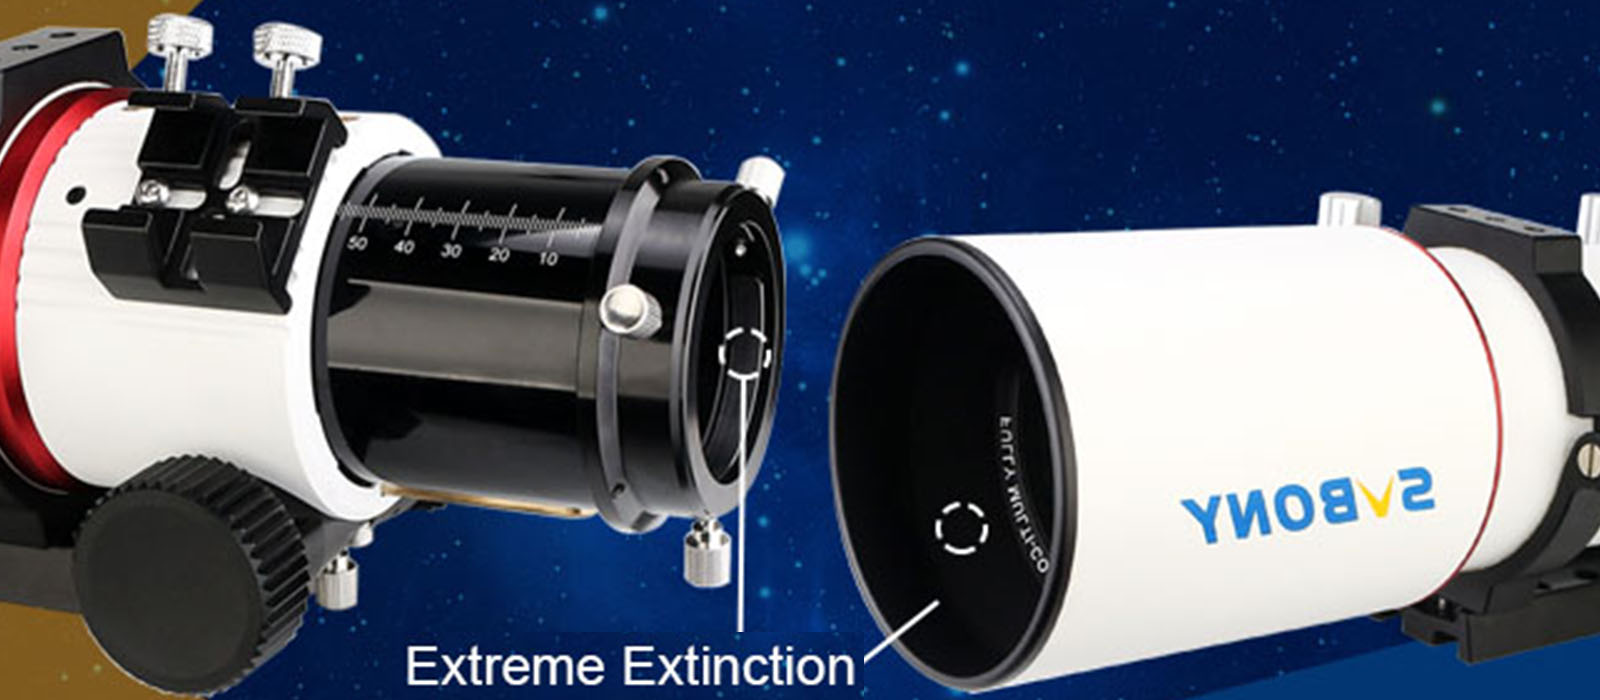 sv550 telescope with extreme extinction.jpg